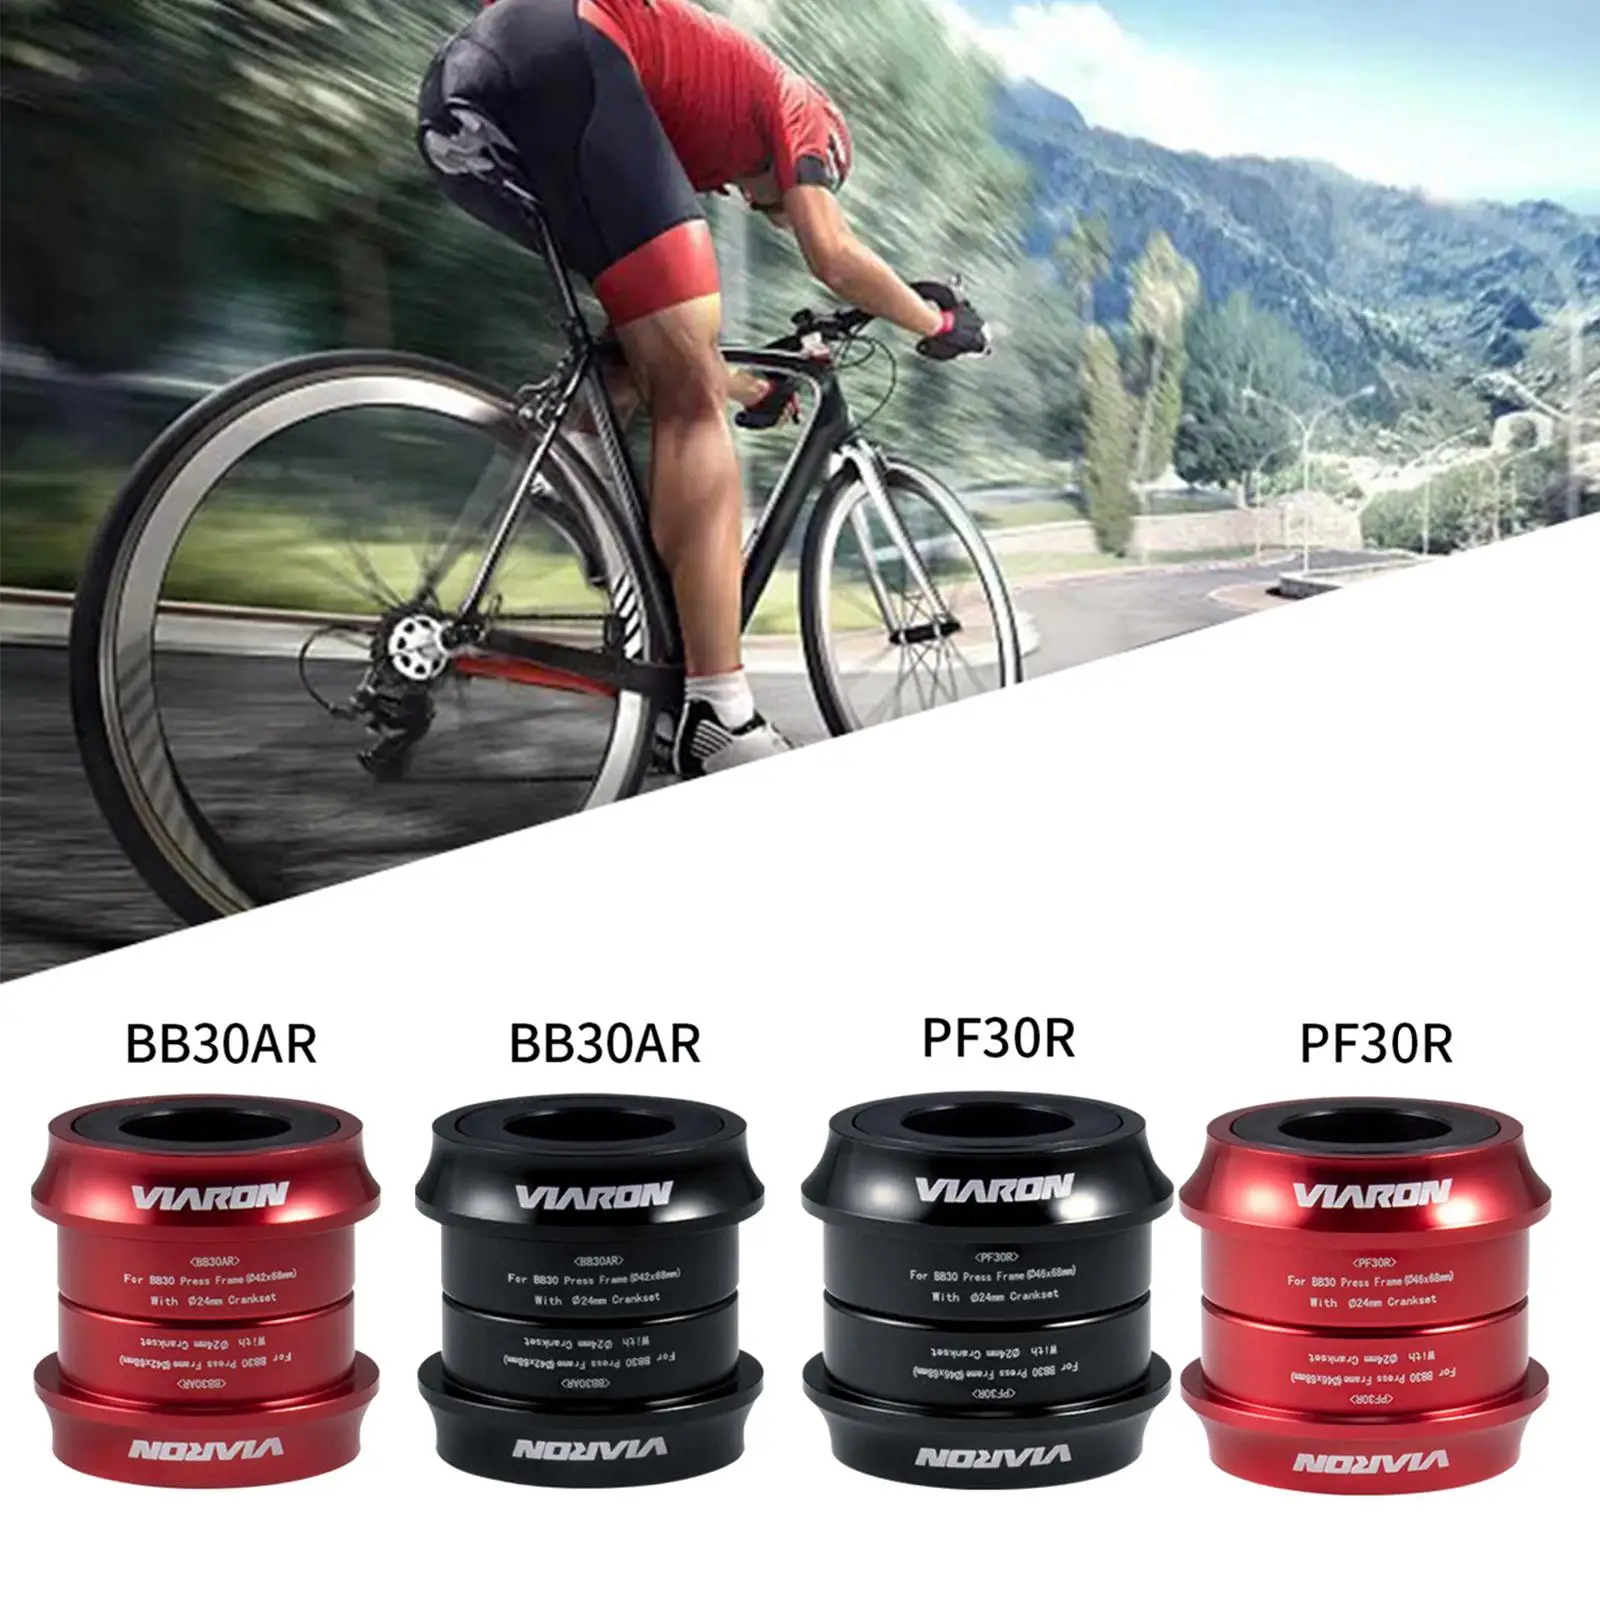 Press Fit Bike Bicycle Bottom Bracket for Shimano Crankset BB30AR/PF30R 24mm